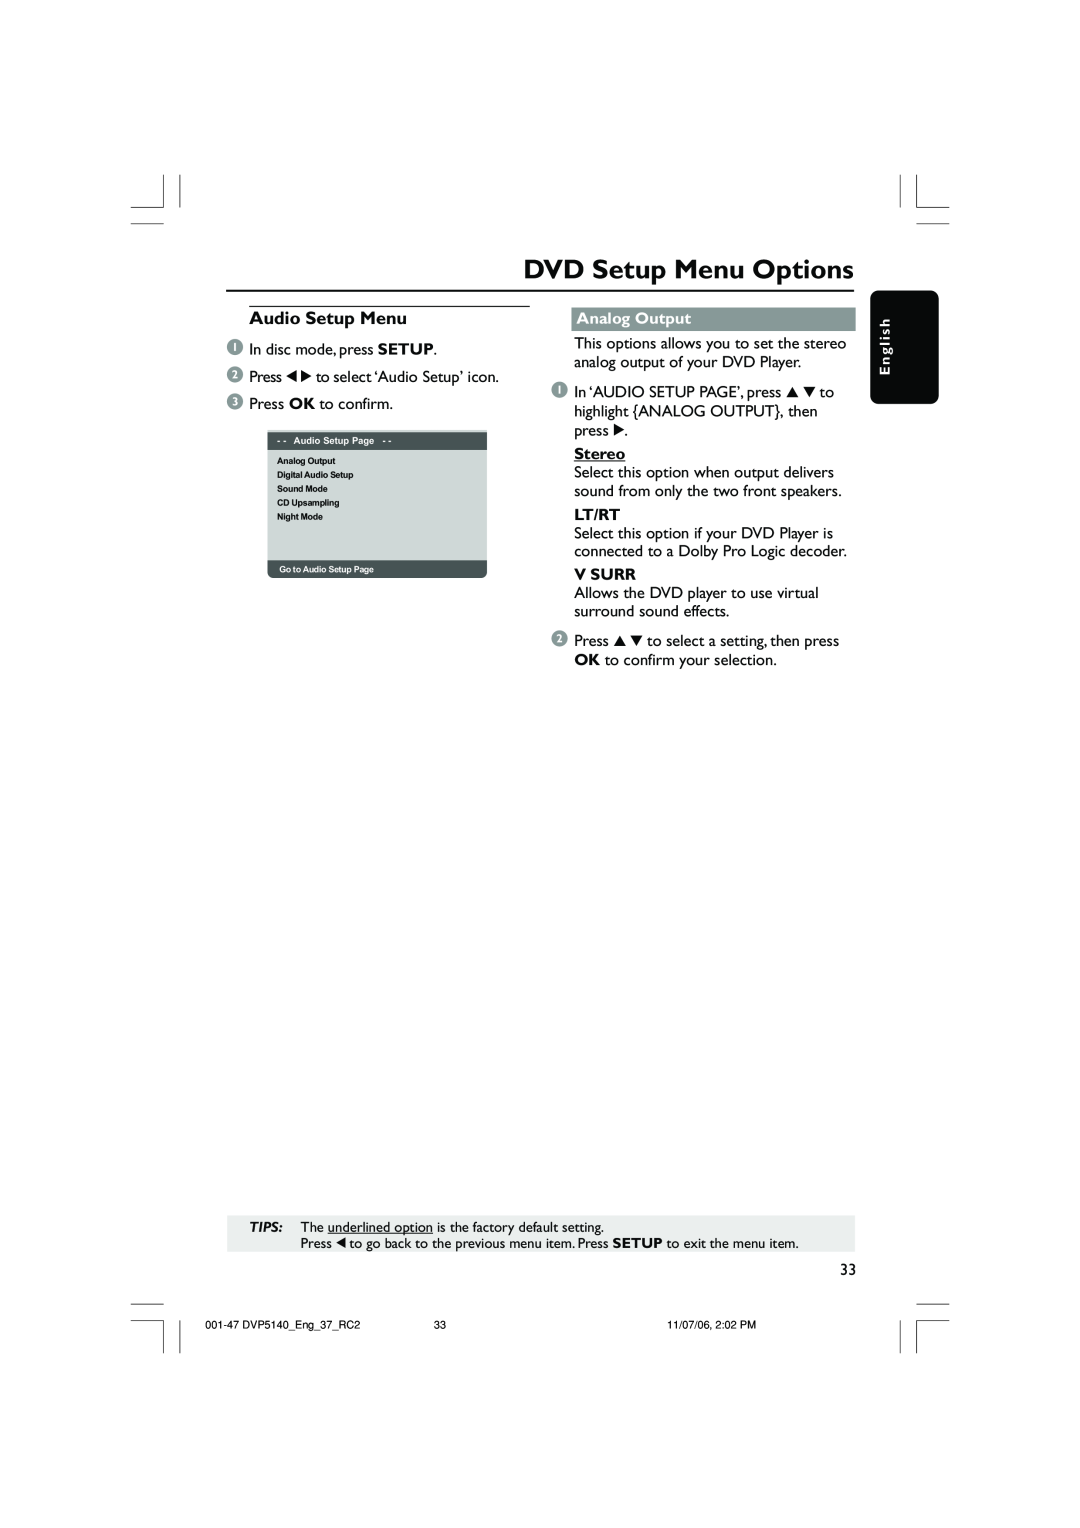 Philips DVP5140 user manual Audio Setup Menu, DVD Setup Menu Options, Analog Output, Stereo, Lt/Rt, V Surr 